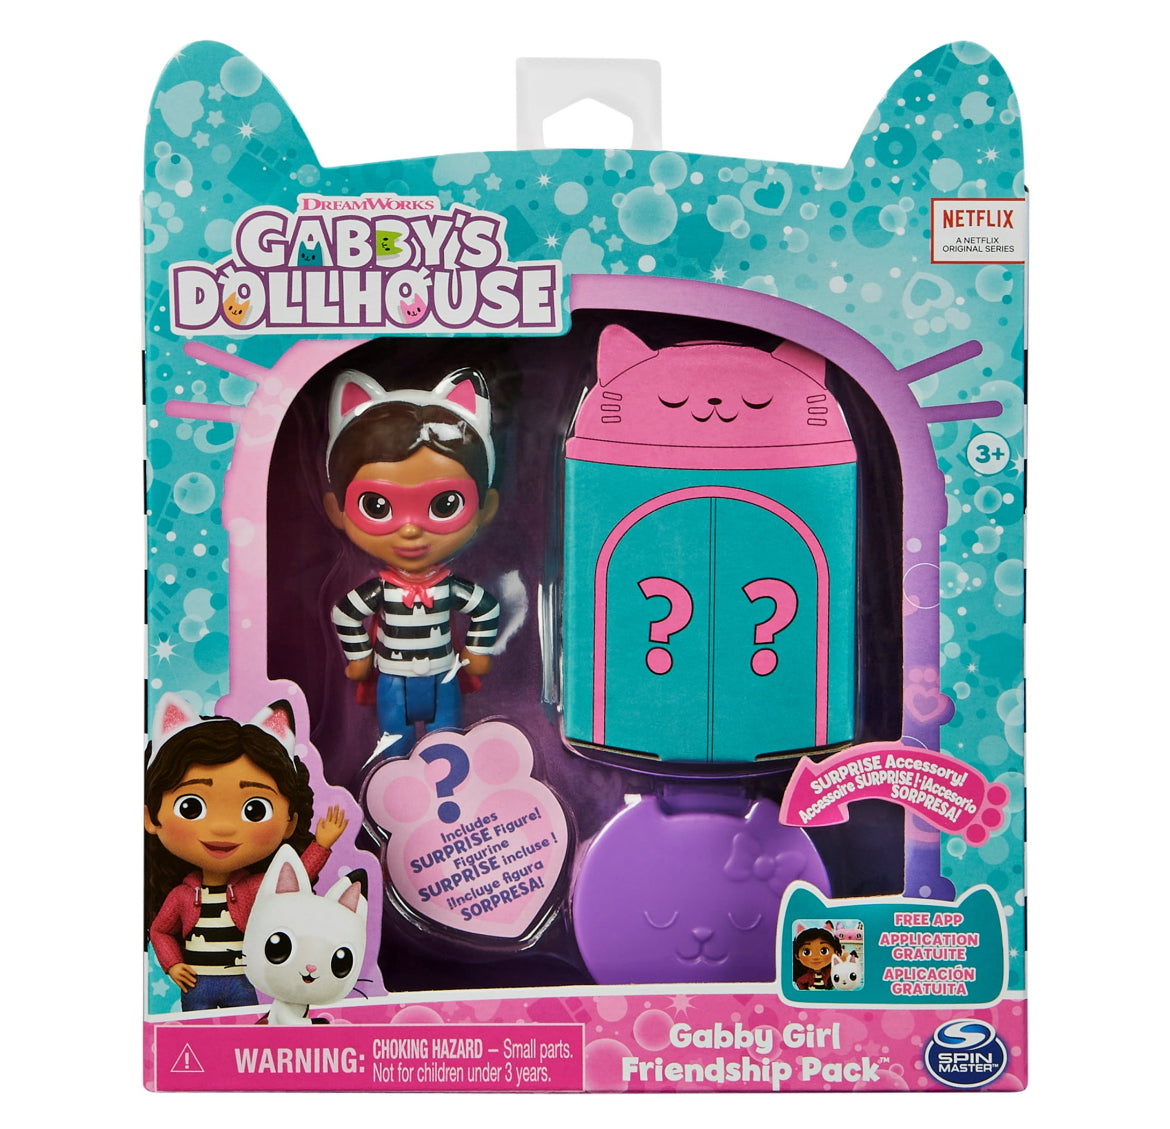 Gabby’s Dollhouse, Friendship Pack with Gabby Girl 37453